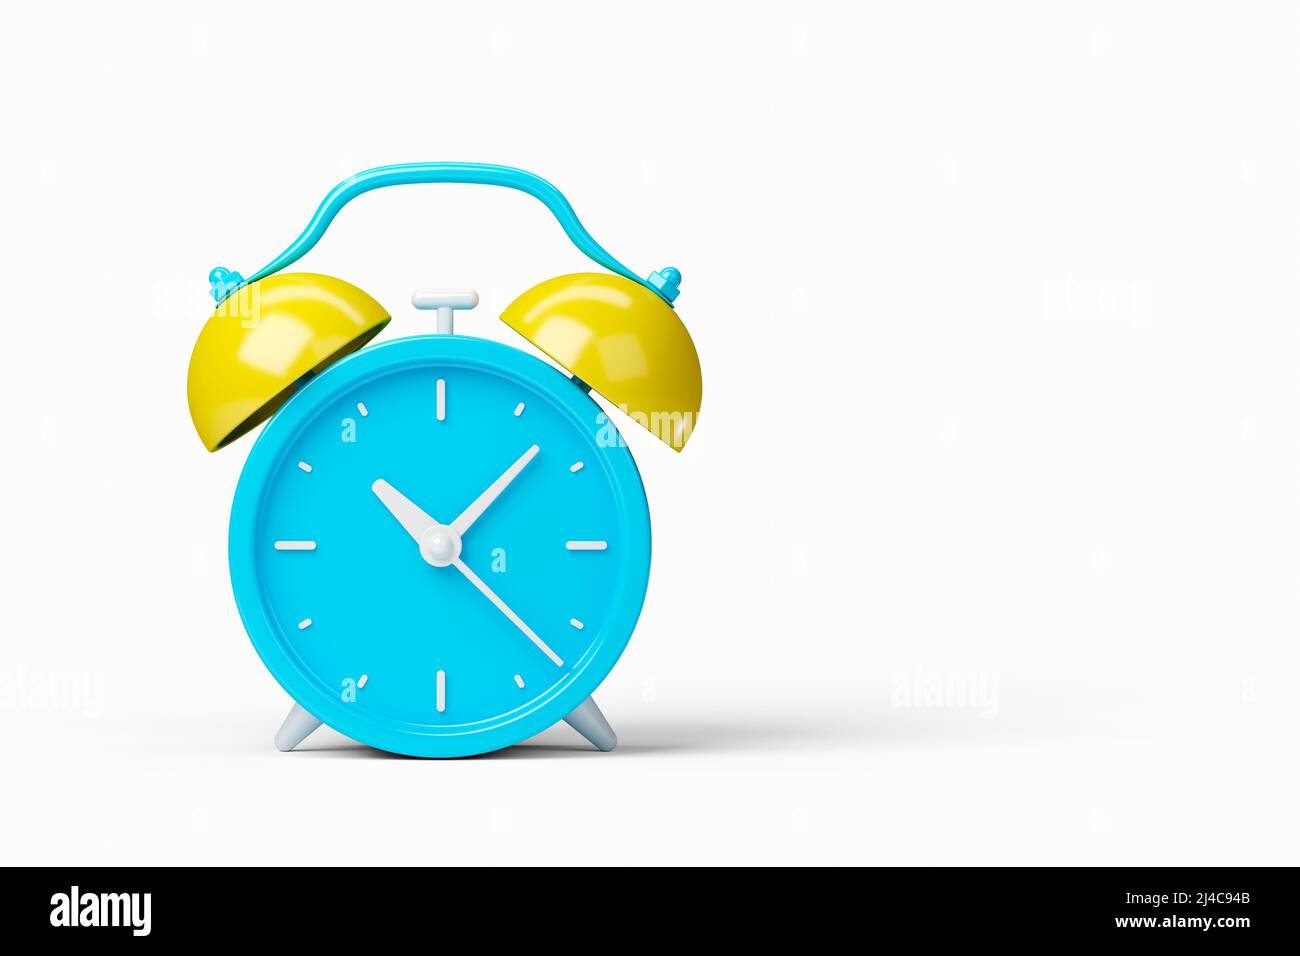 Blue vintage alarm clock isolated on white background. Retro design Stock Photo